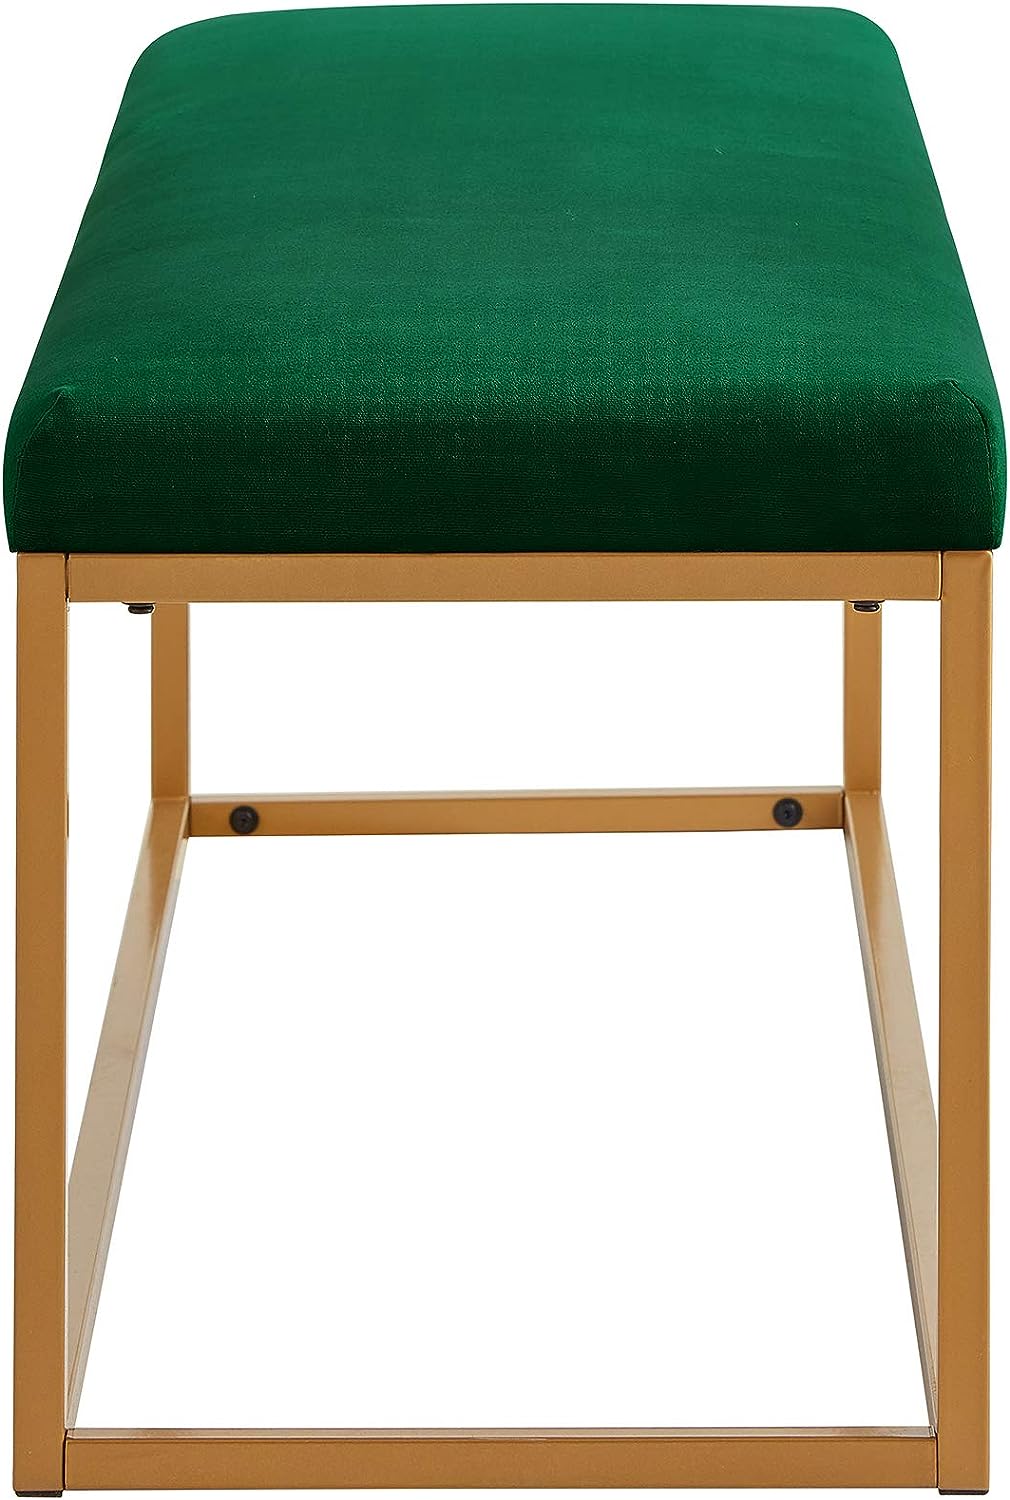 Ball & Cast Upholstered Bench, 48" W, Emerald - Frame - $50